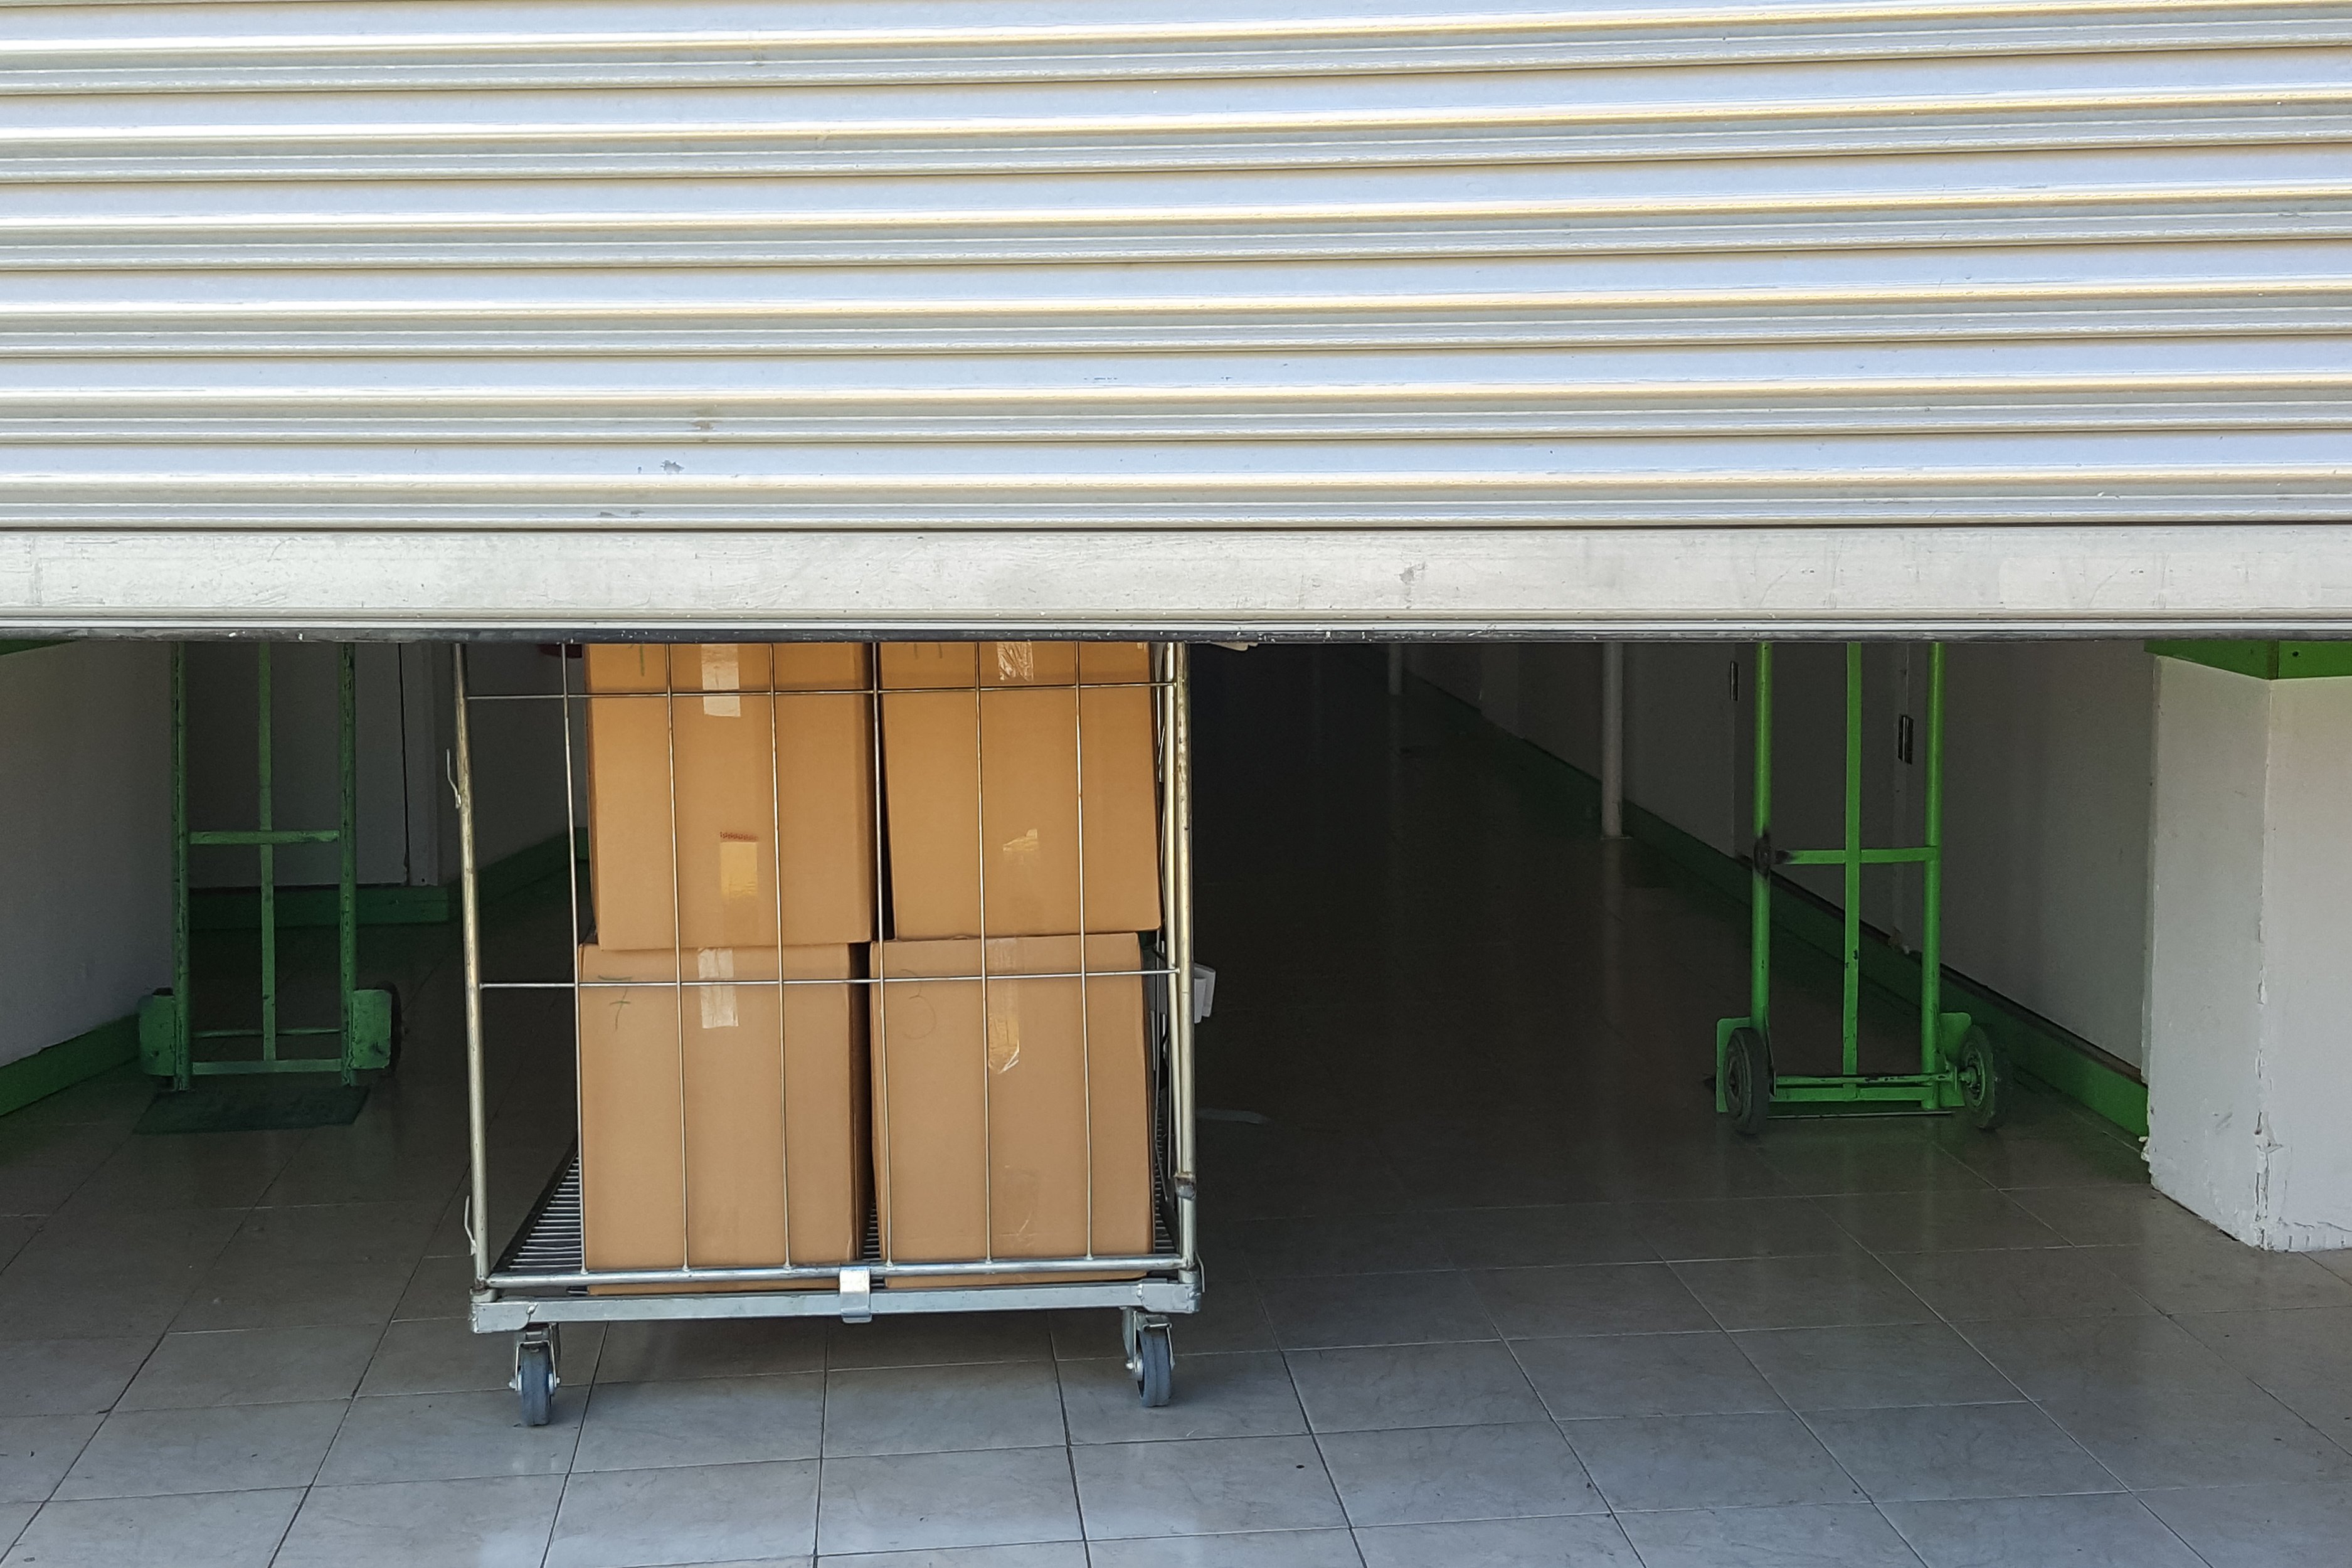 n image of a large self-storage unit.